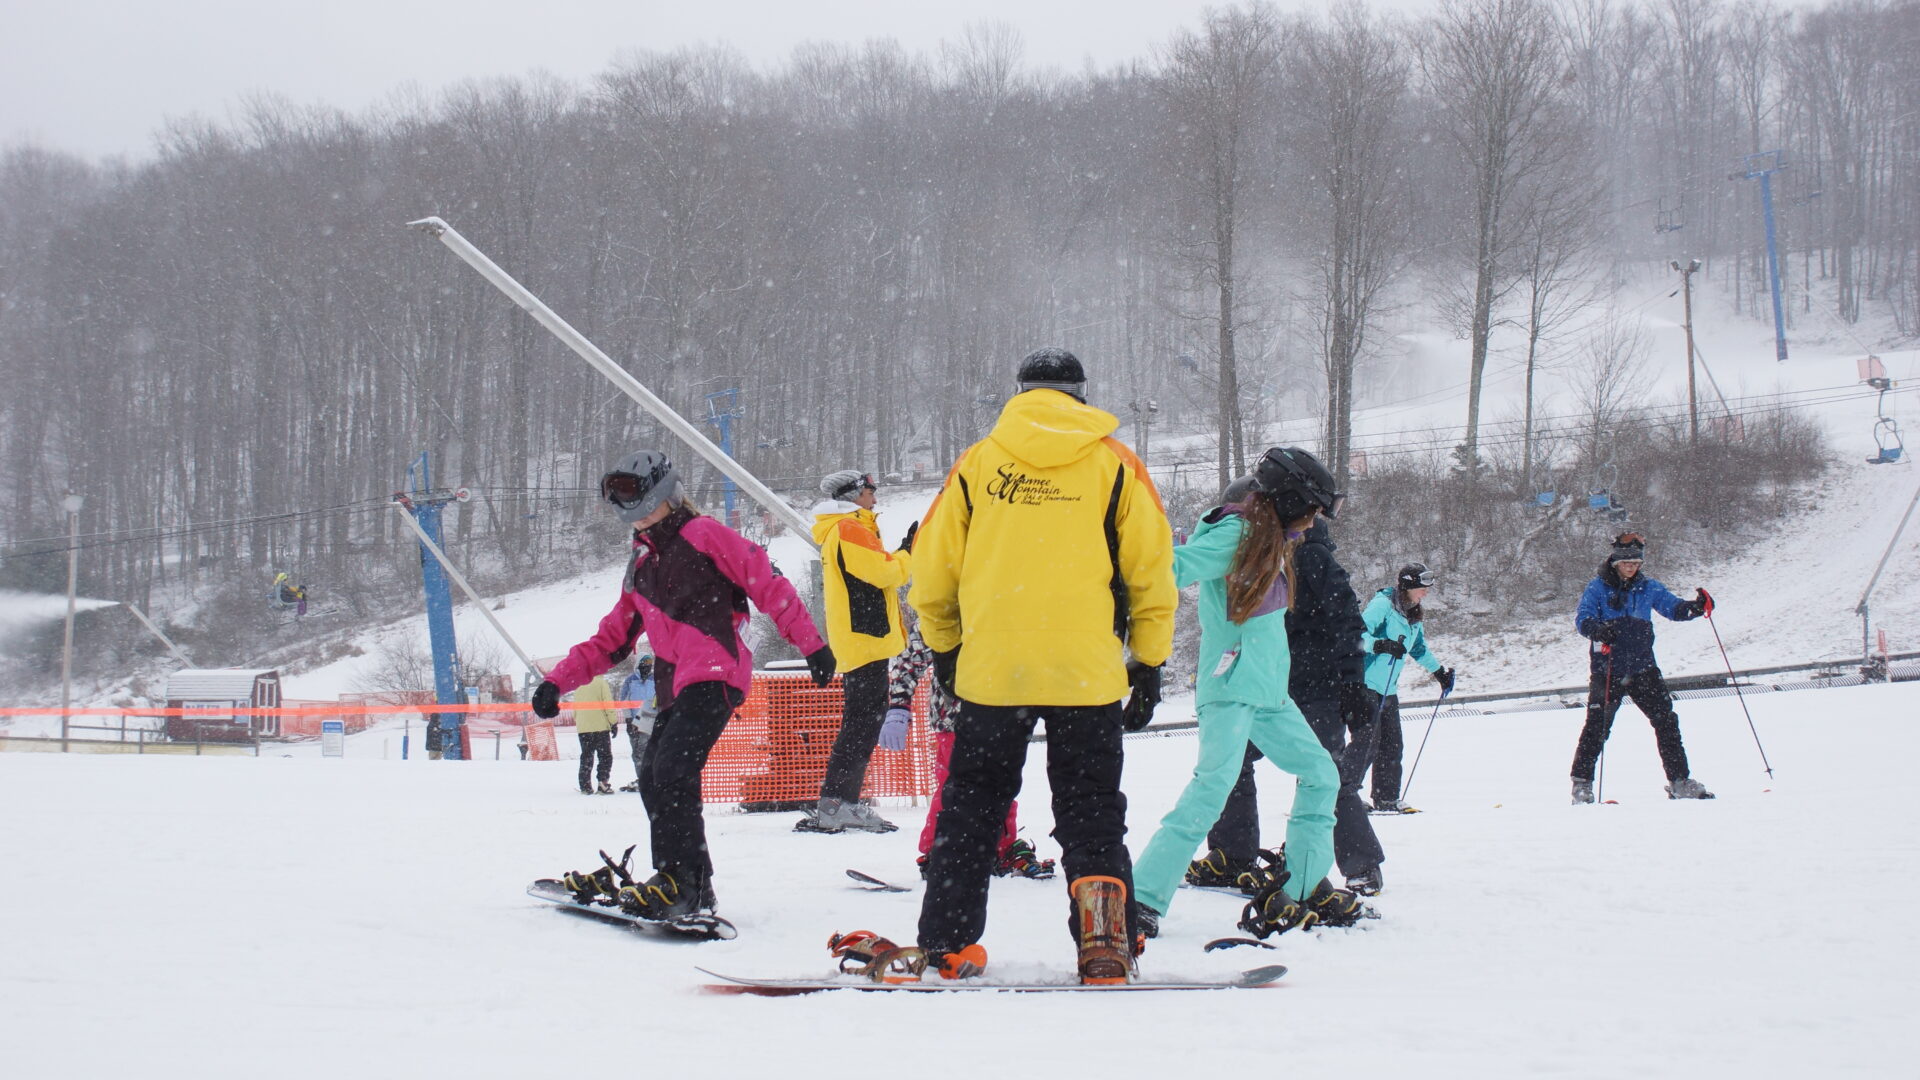 Ski School Children's Program photo demonstrating a snowboarding lesson